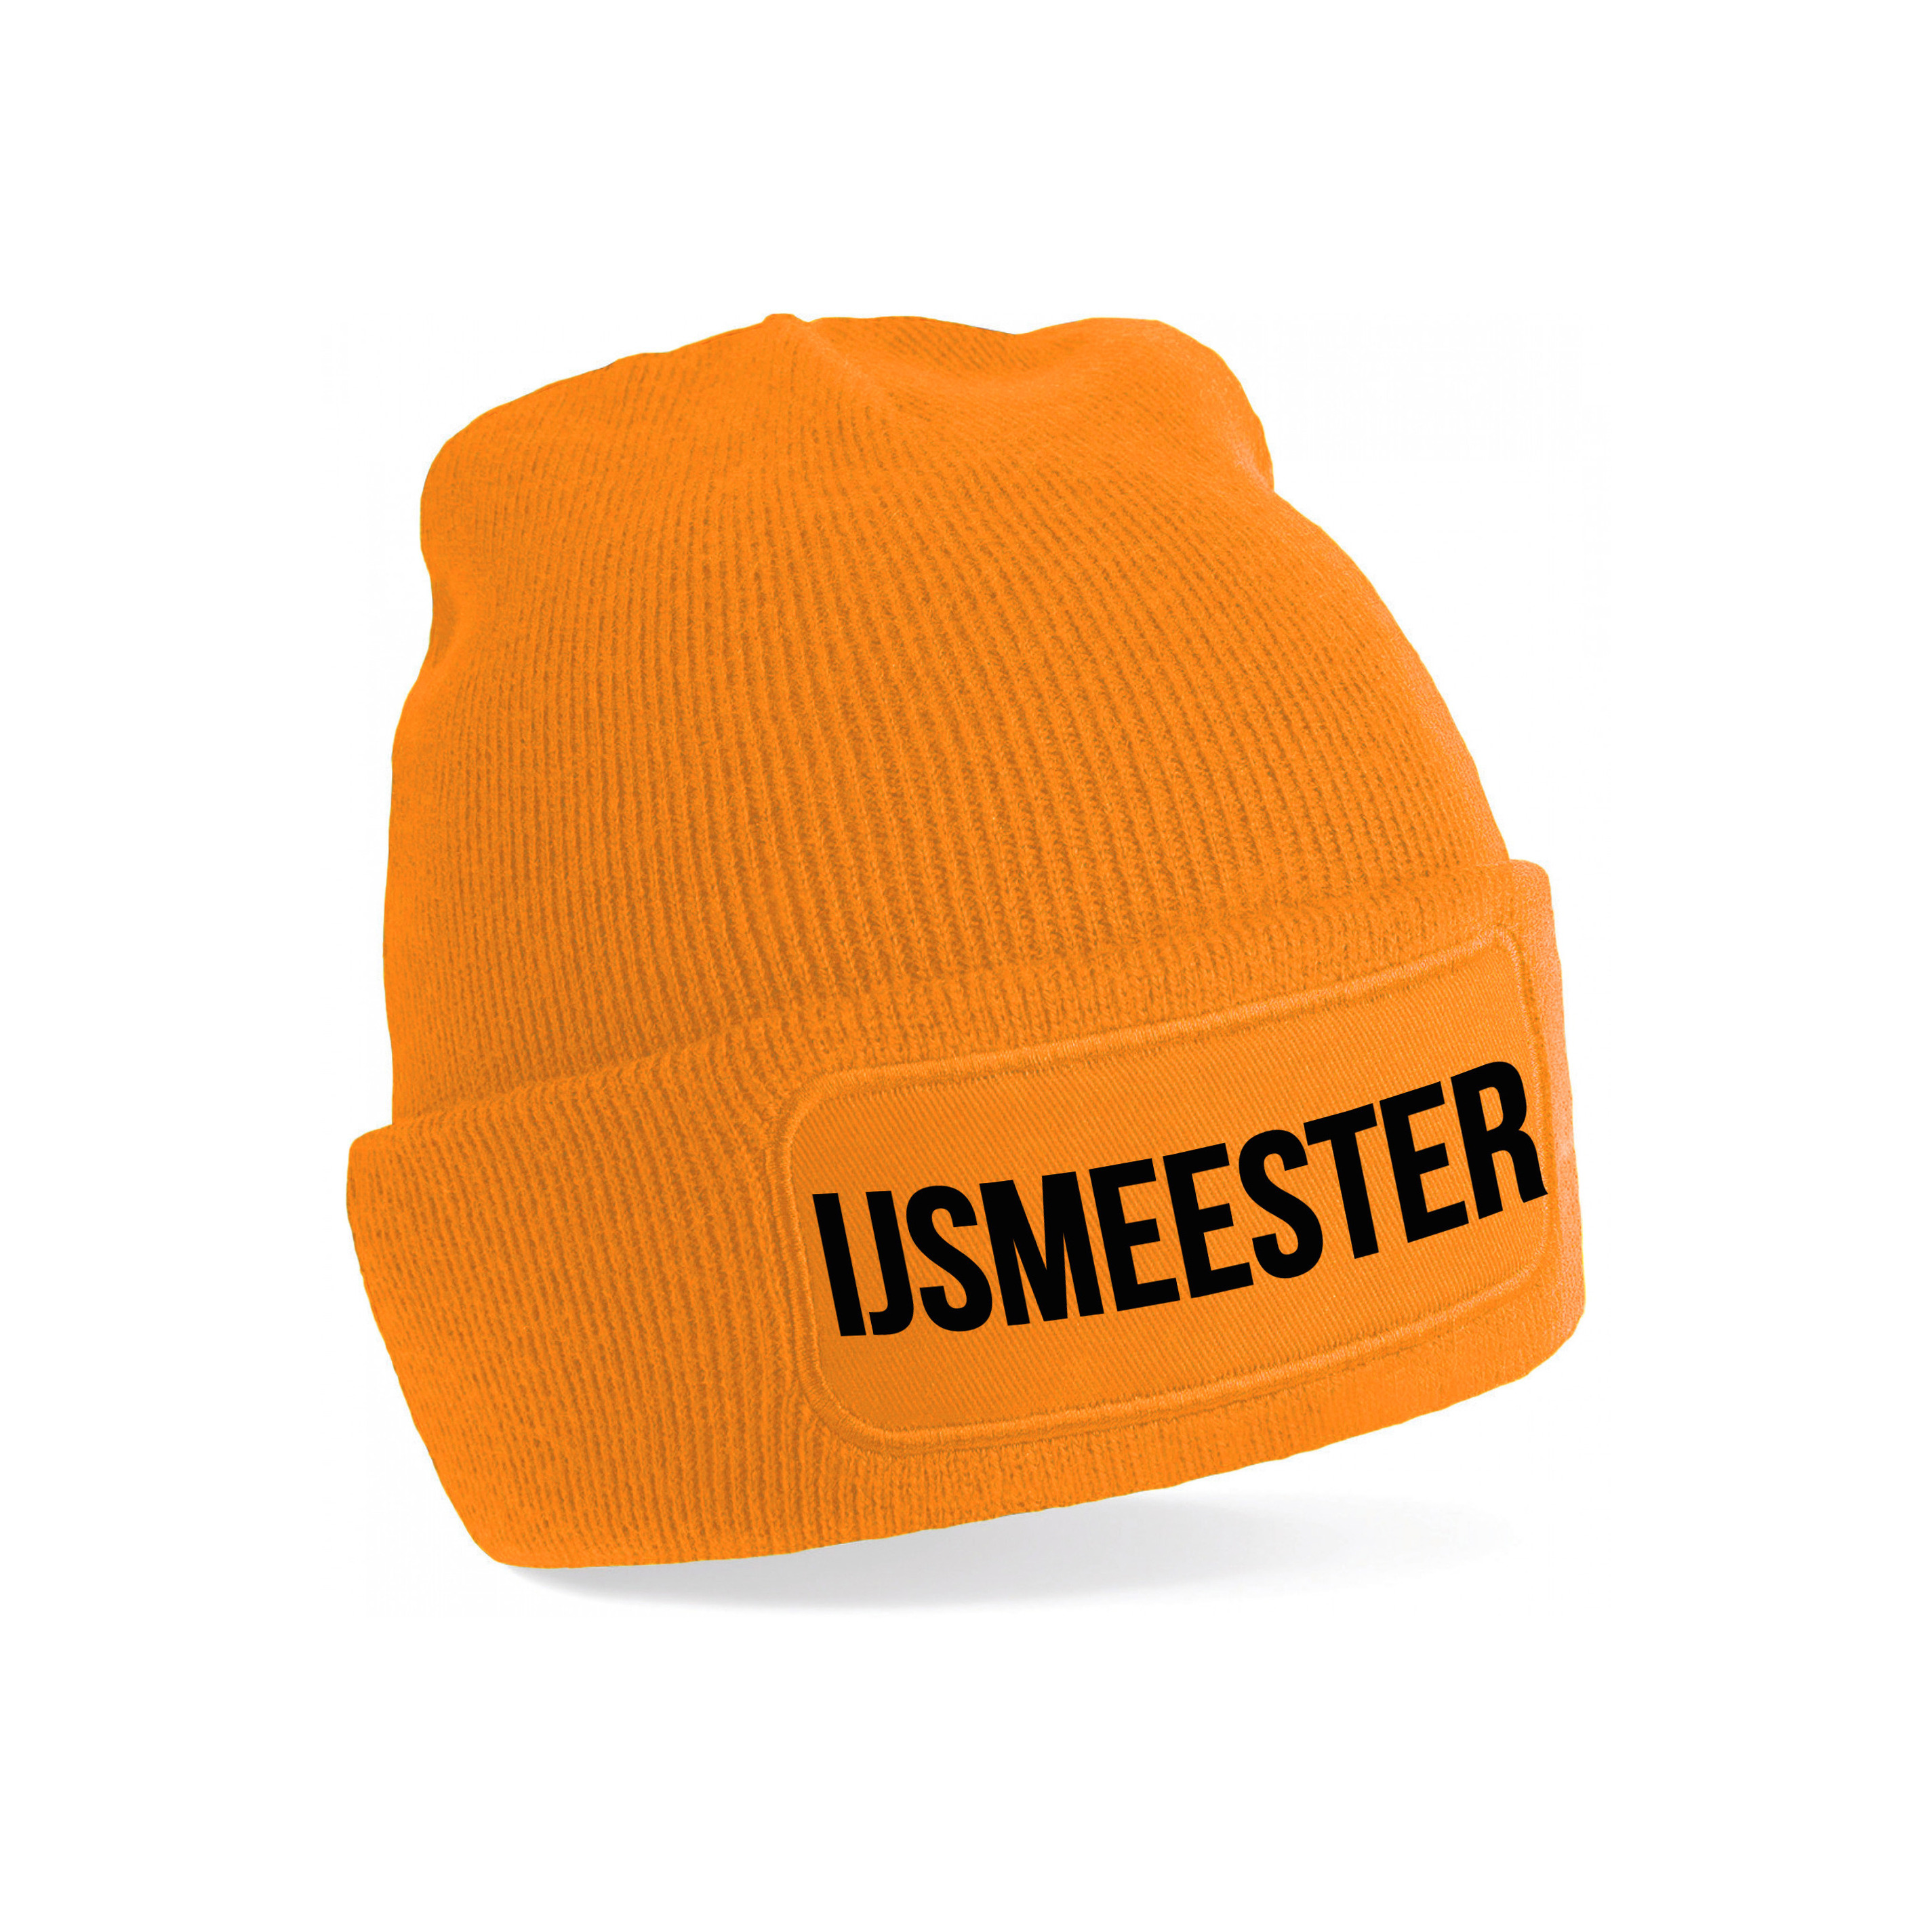 IJsmeester muts - unisex - one size - oranje